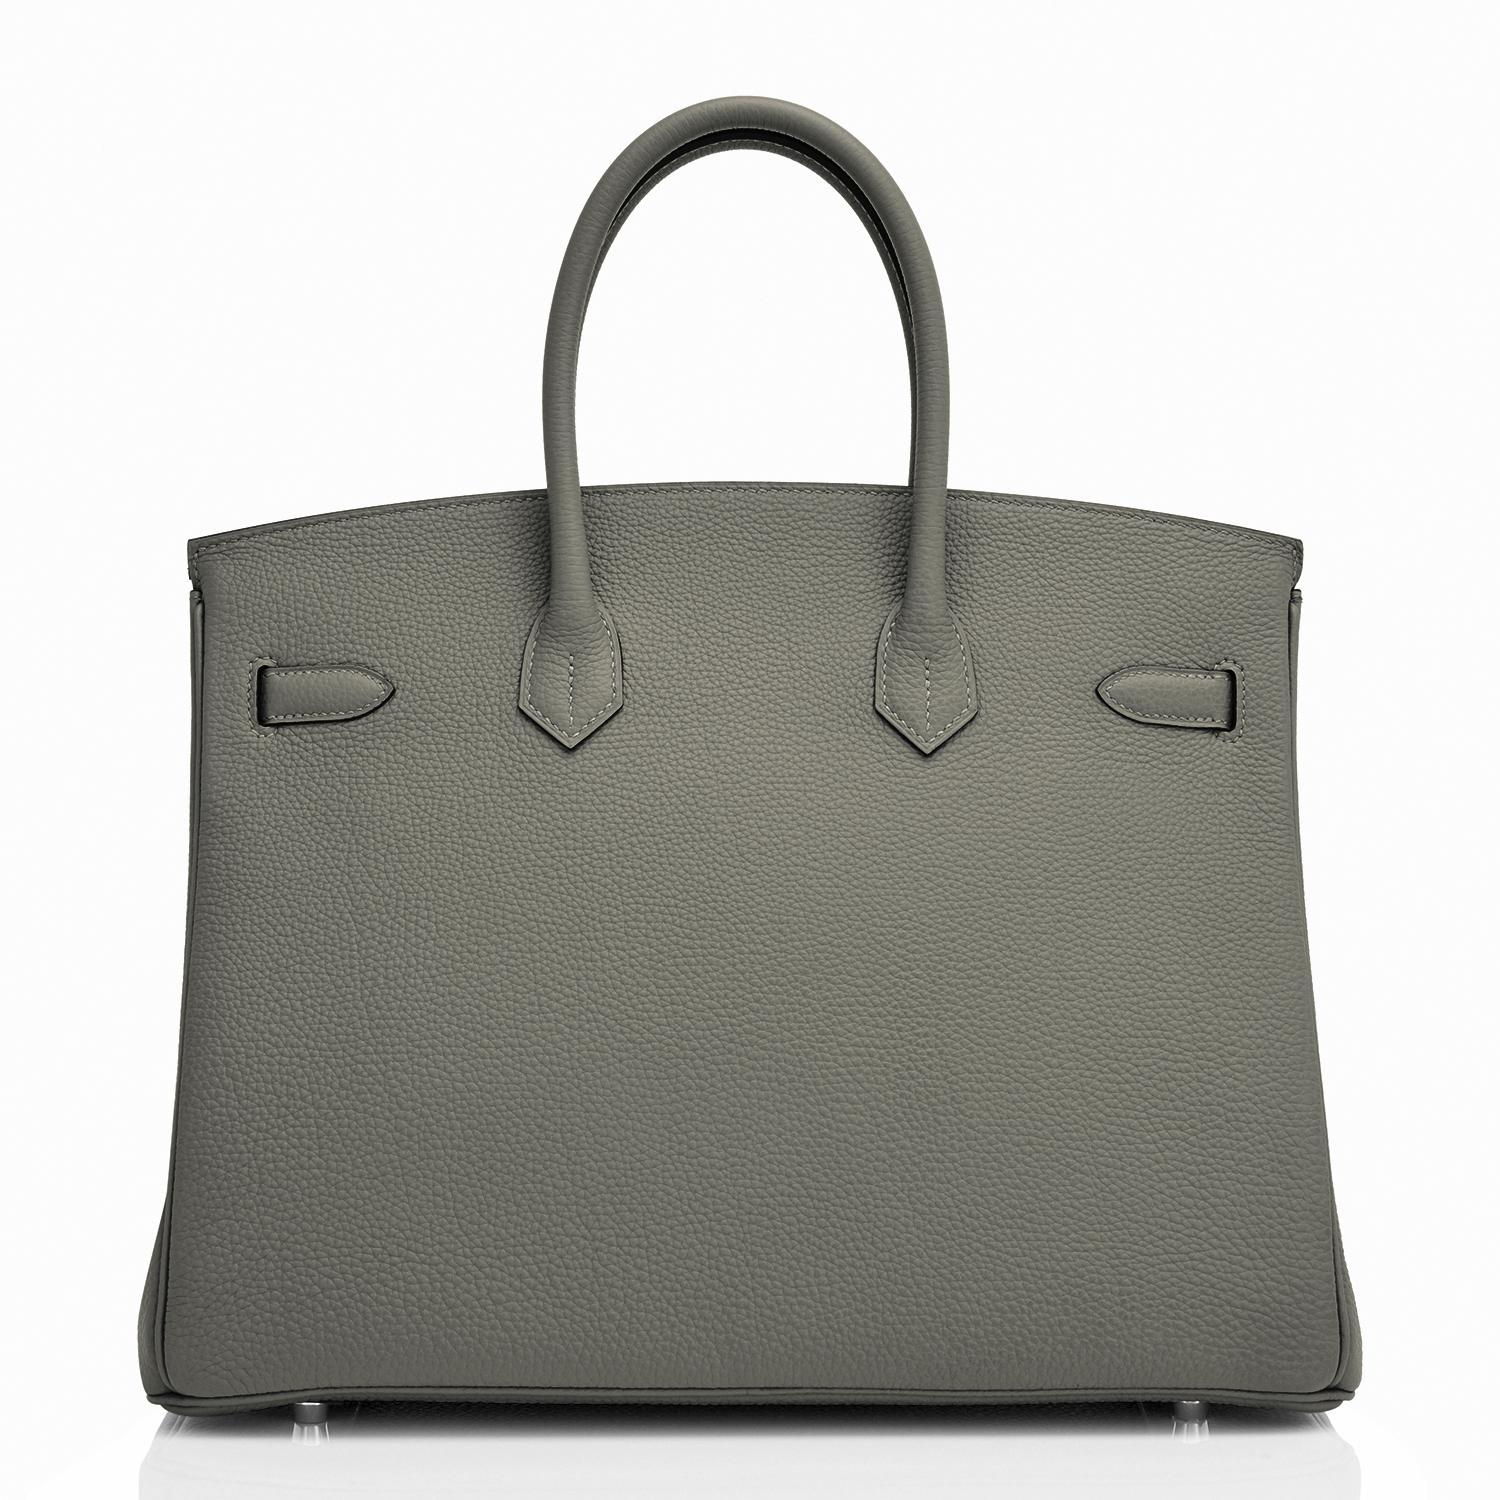 Sac Hermès Birkin 35 cm Vert de Gris vert gris Togo Palladium Tampon Y, 2020 2